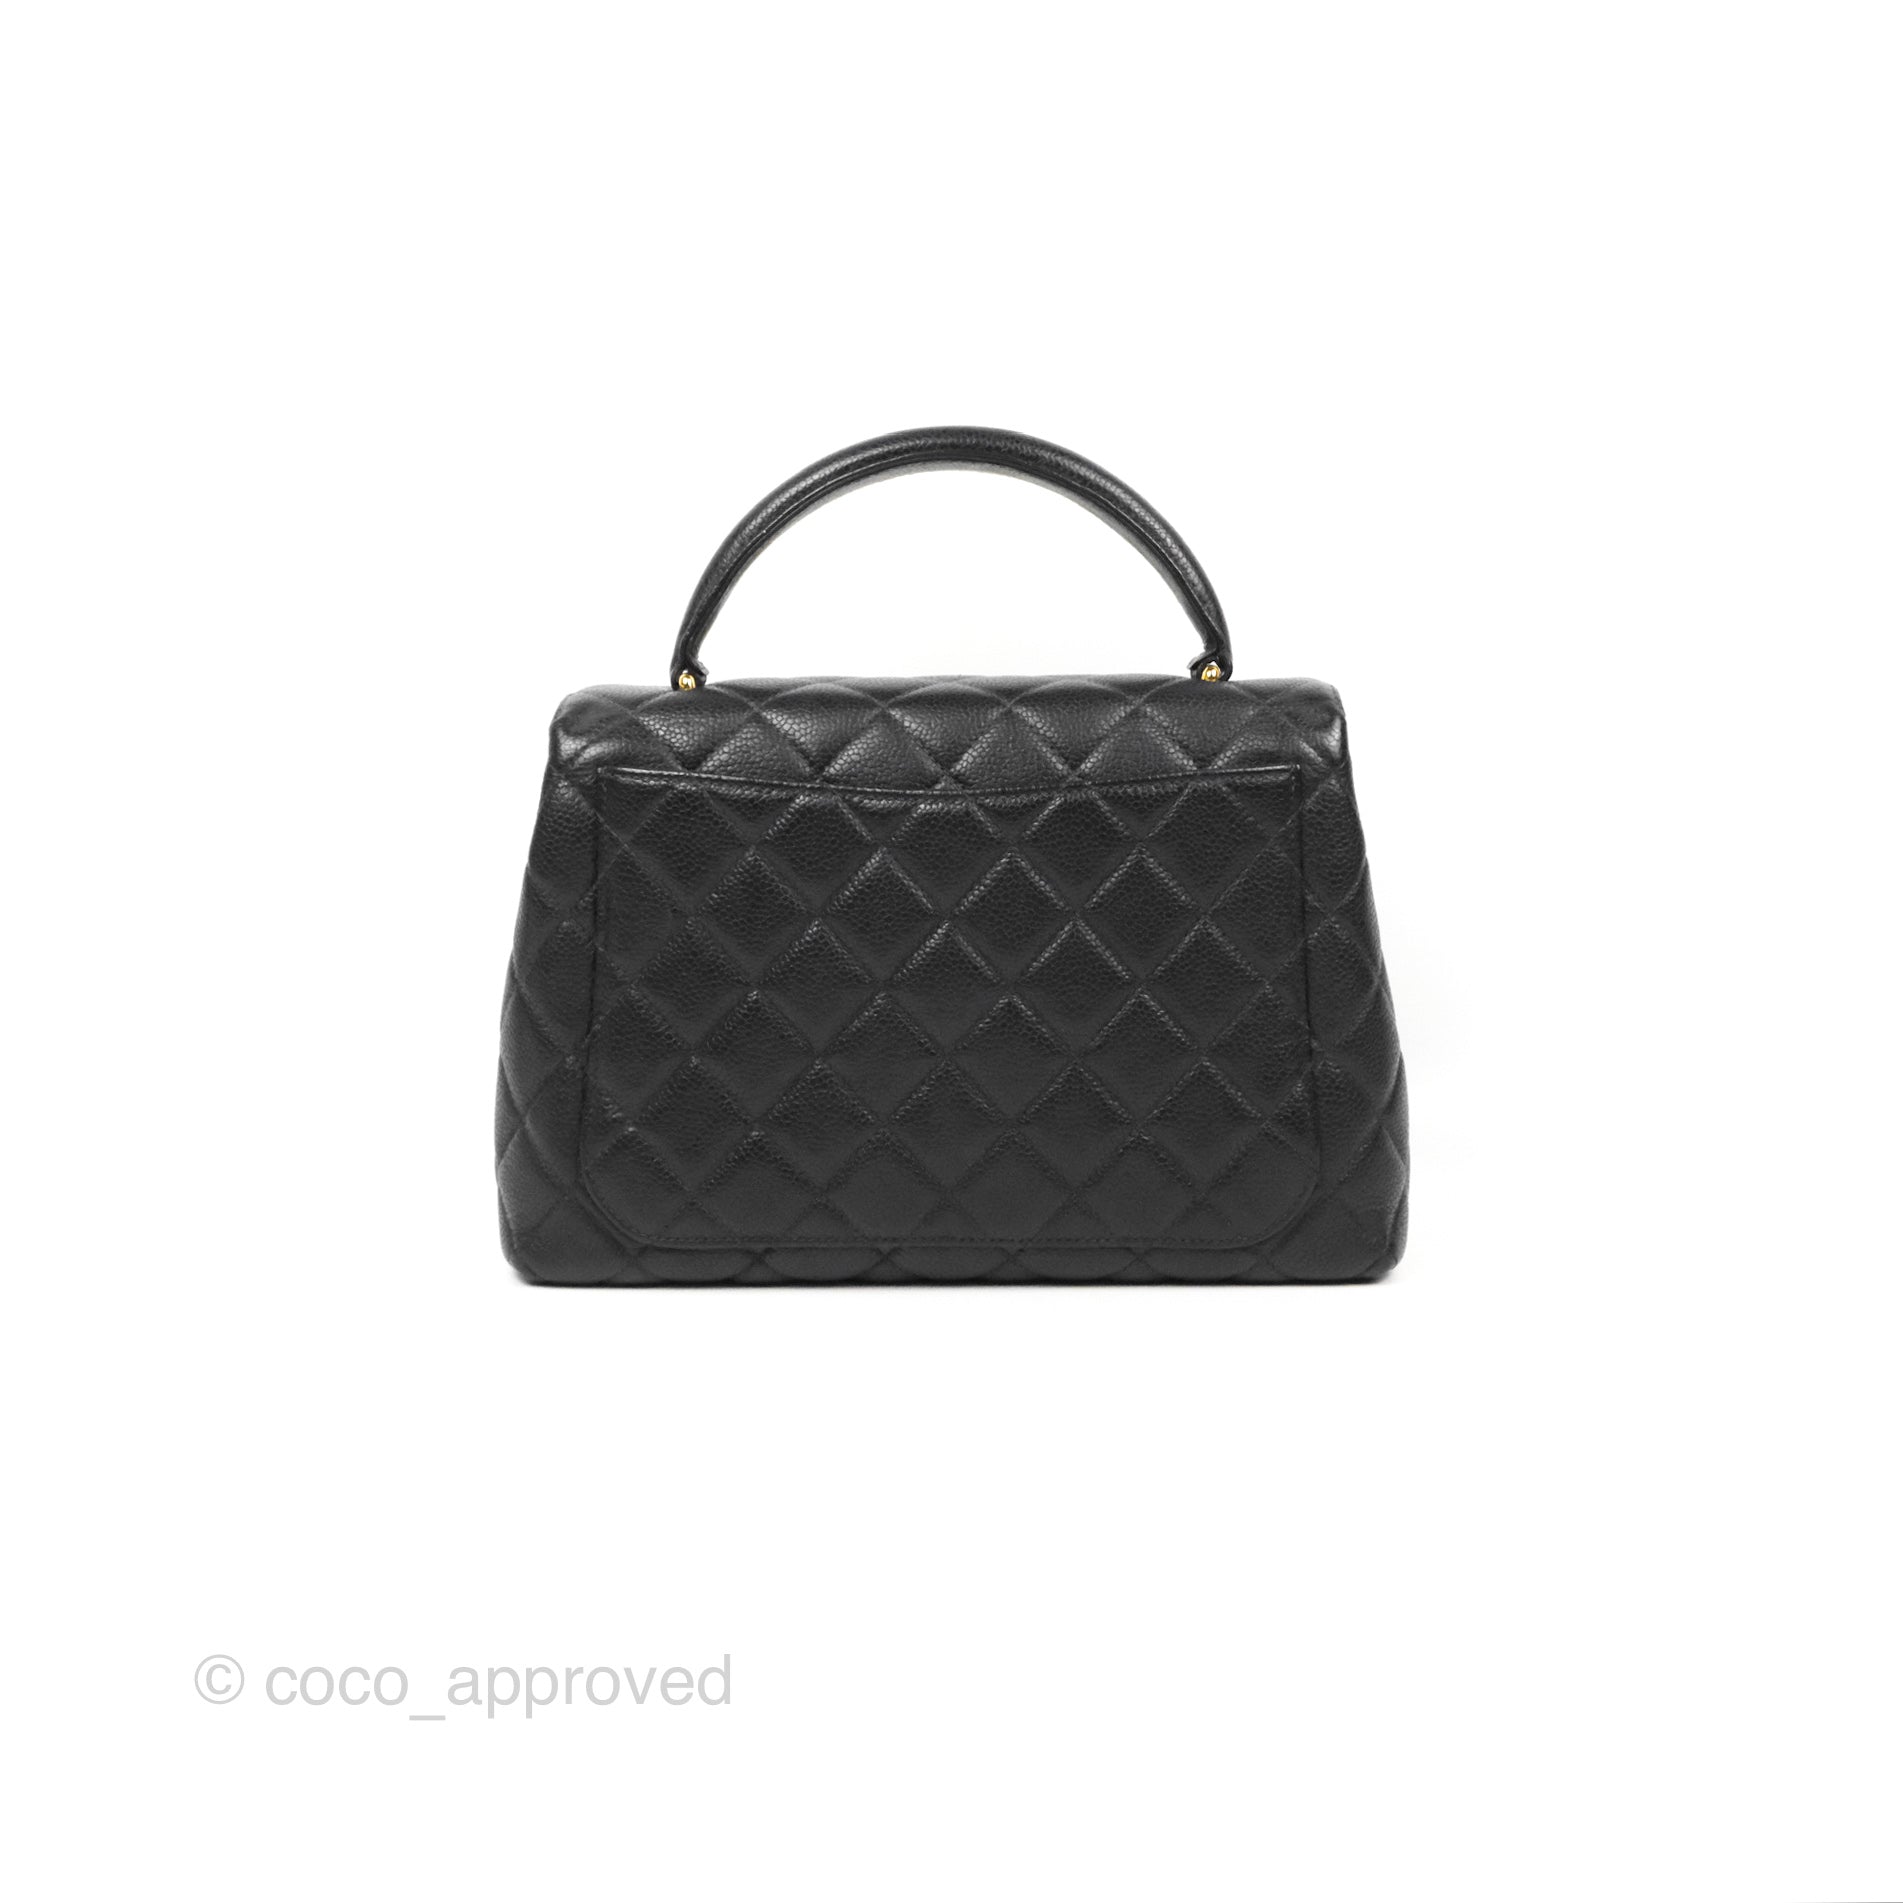 Sold at Auction: Vintage Chanel Quilted Black Leather Handbag